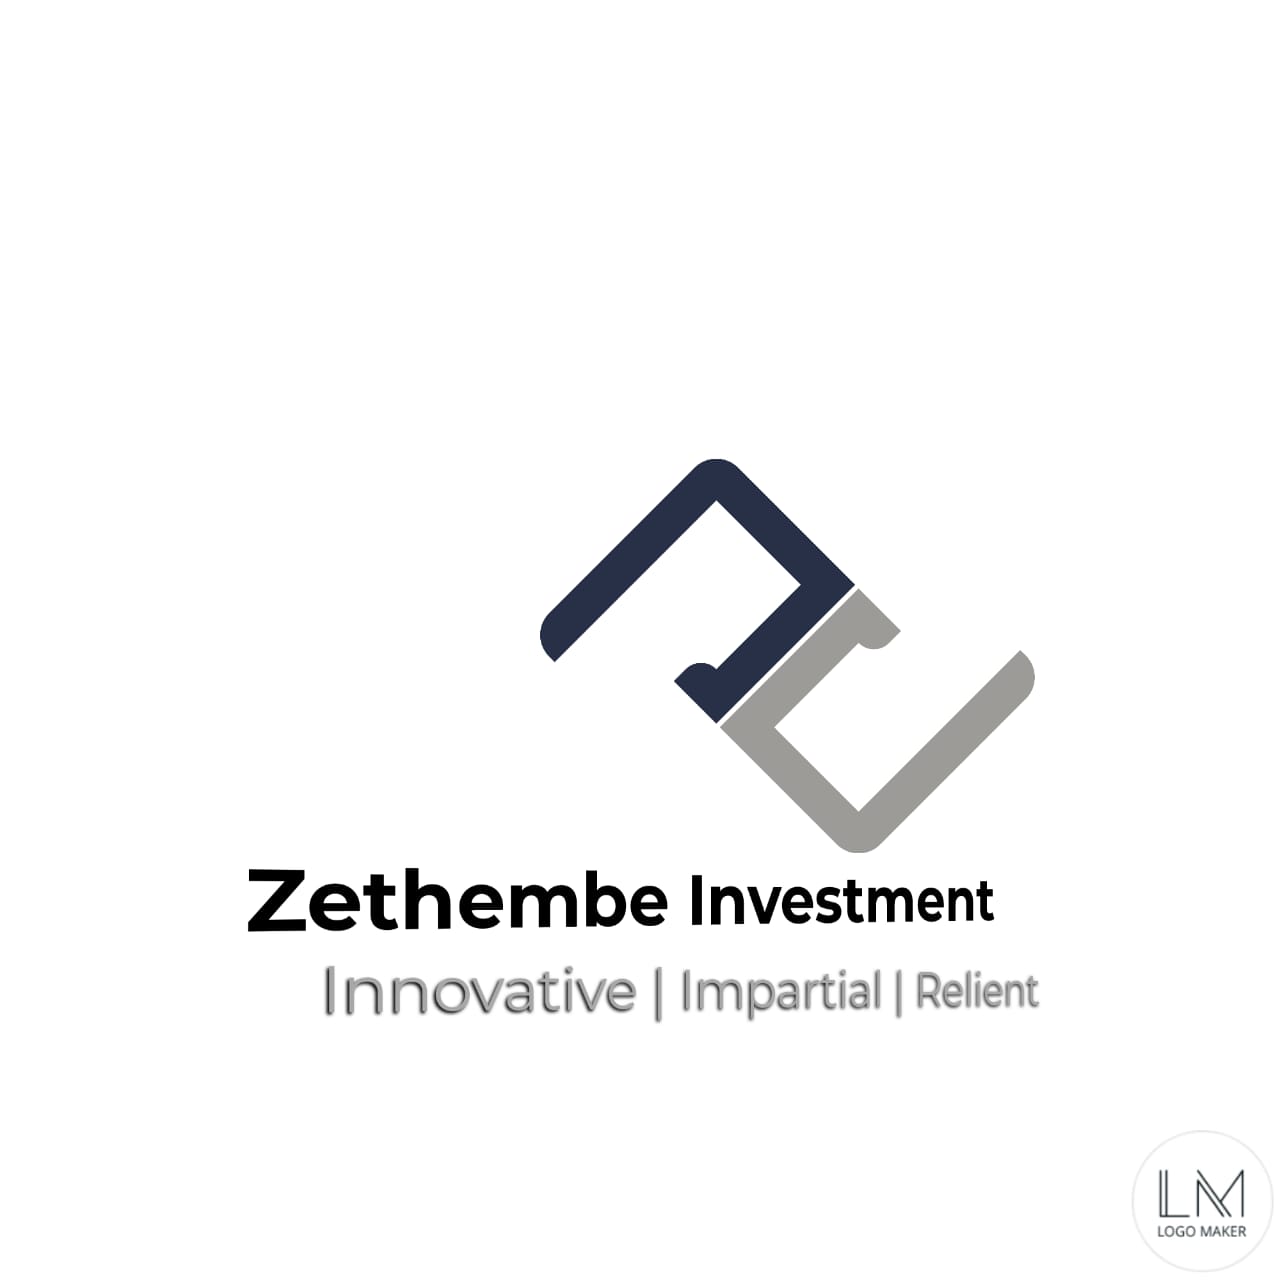 Zethembe Investment